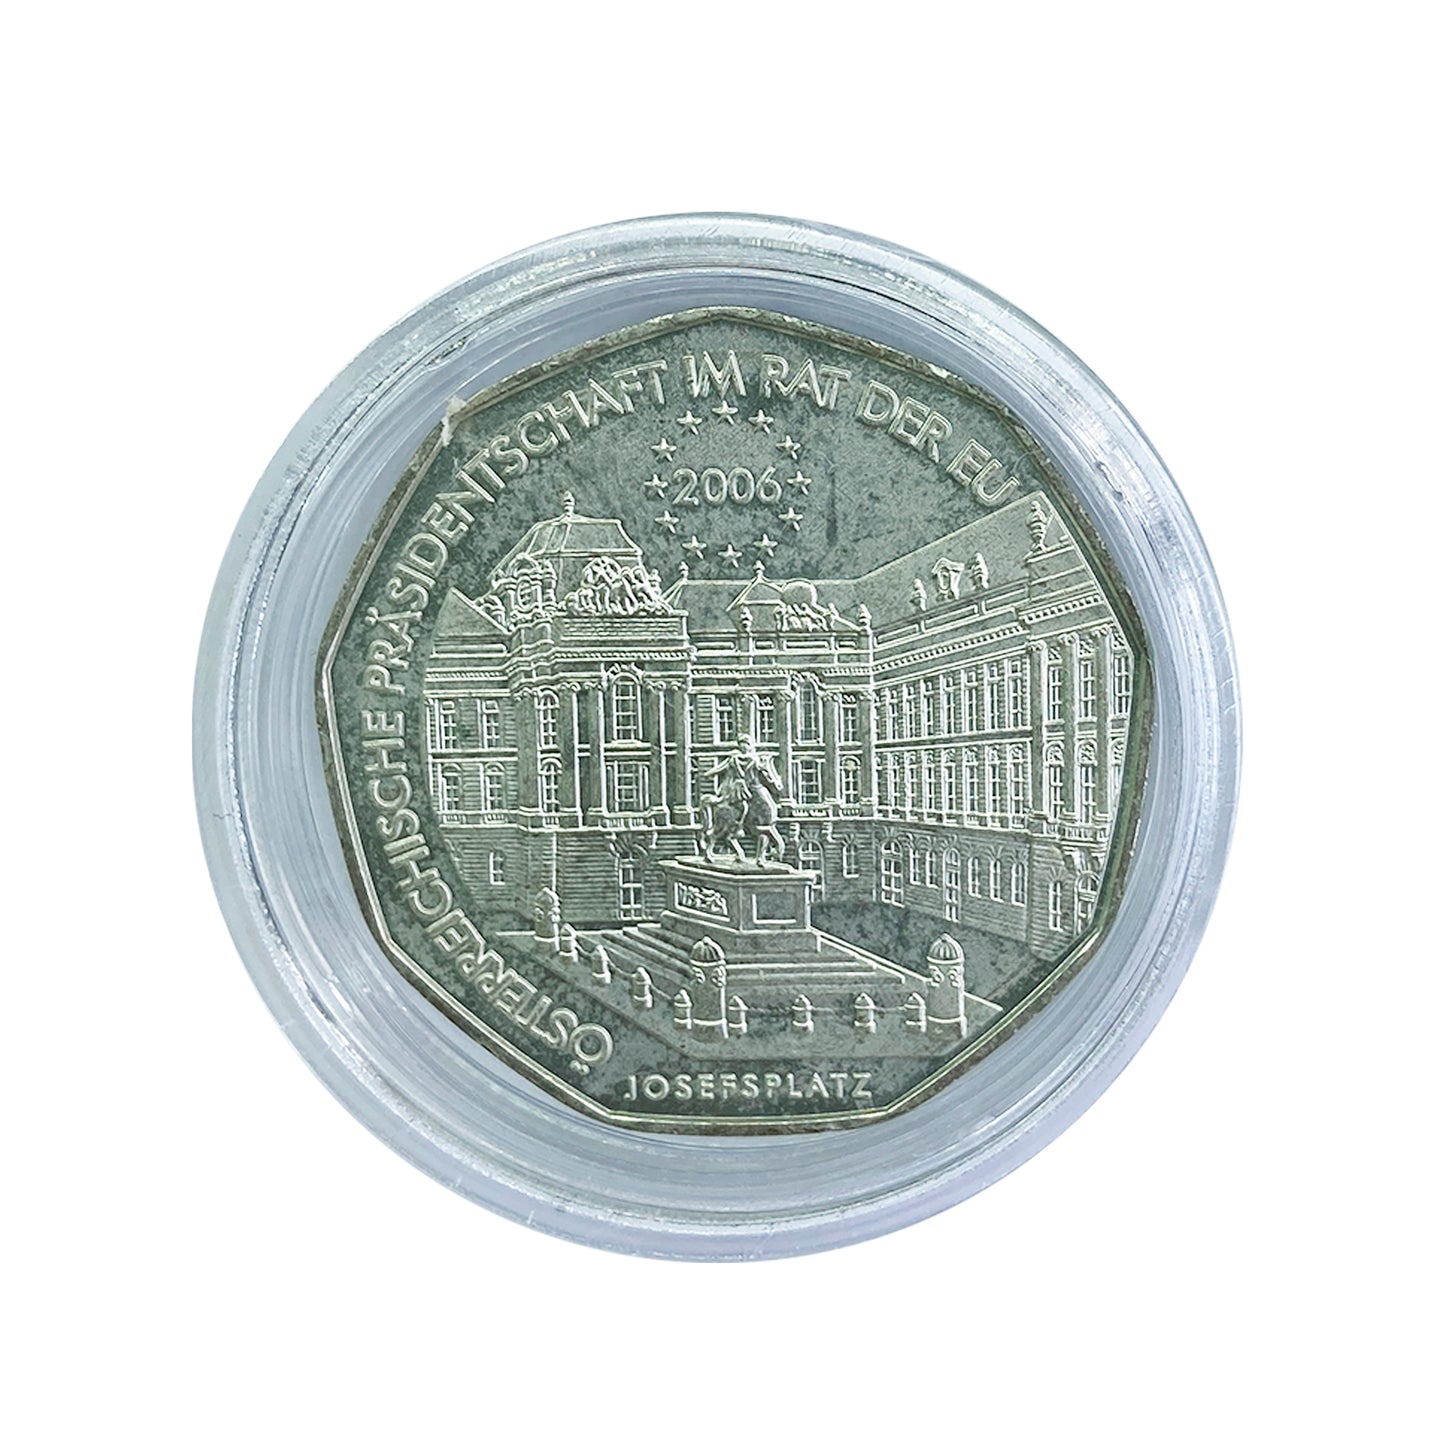 Austria - Moneda 5 euros plata 2006 - Presidencia de Austria de la Unión Europea